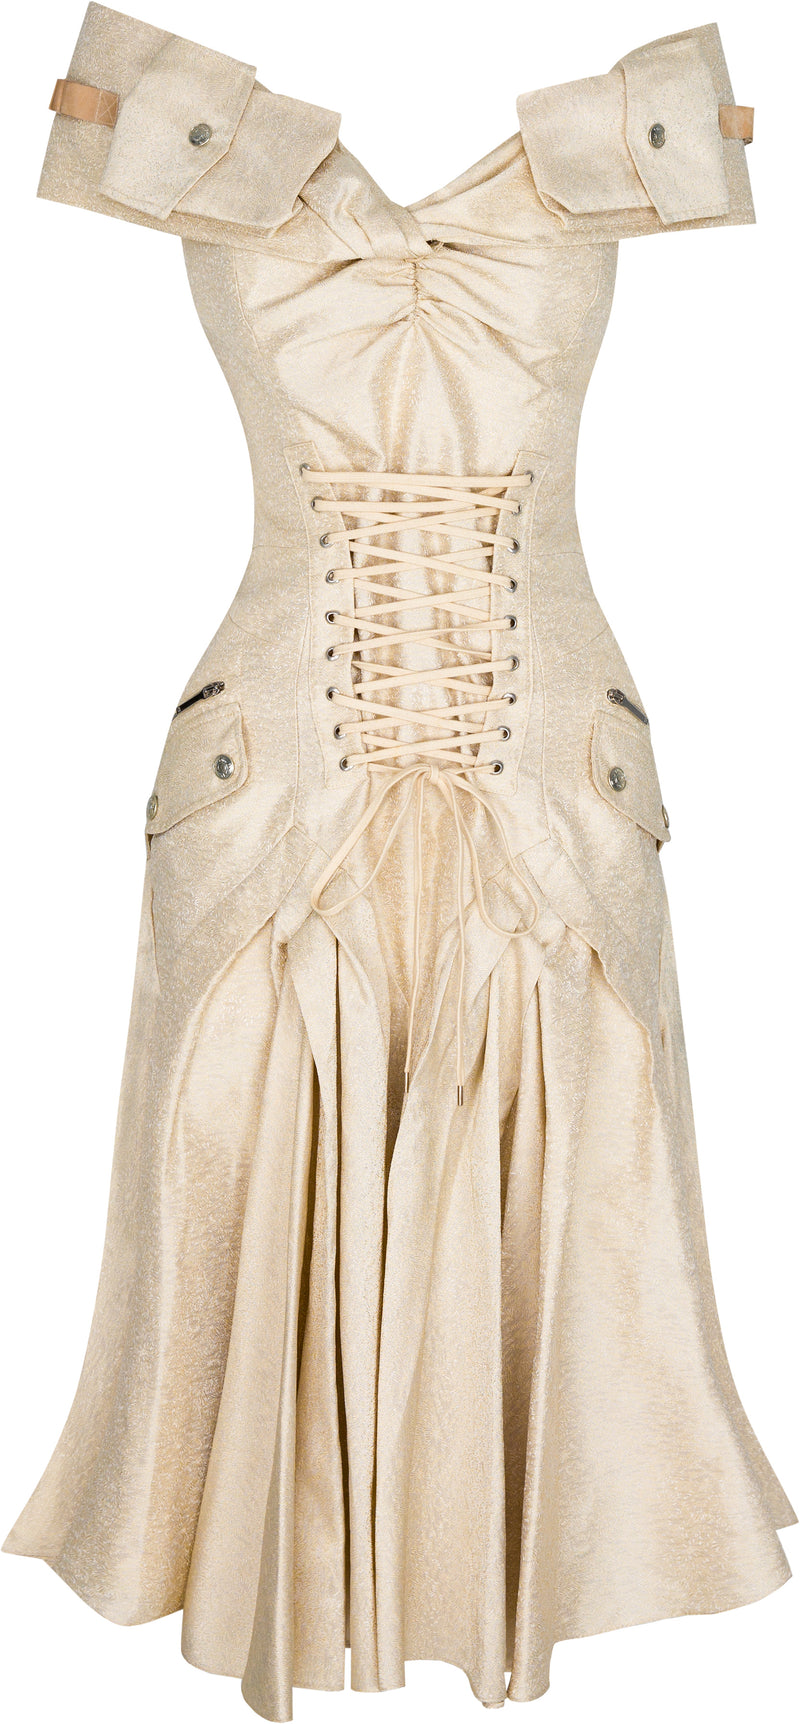 Christian Dior Spring 2003 Silk Jacquard Corset Dress